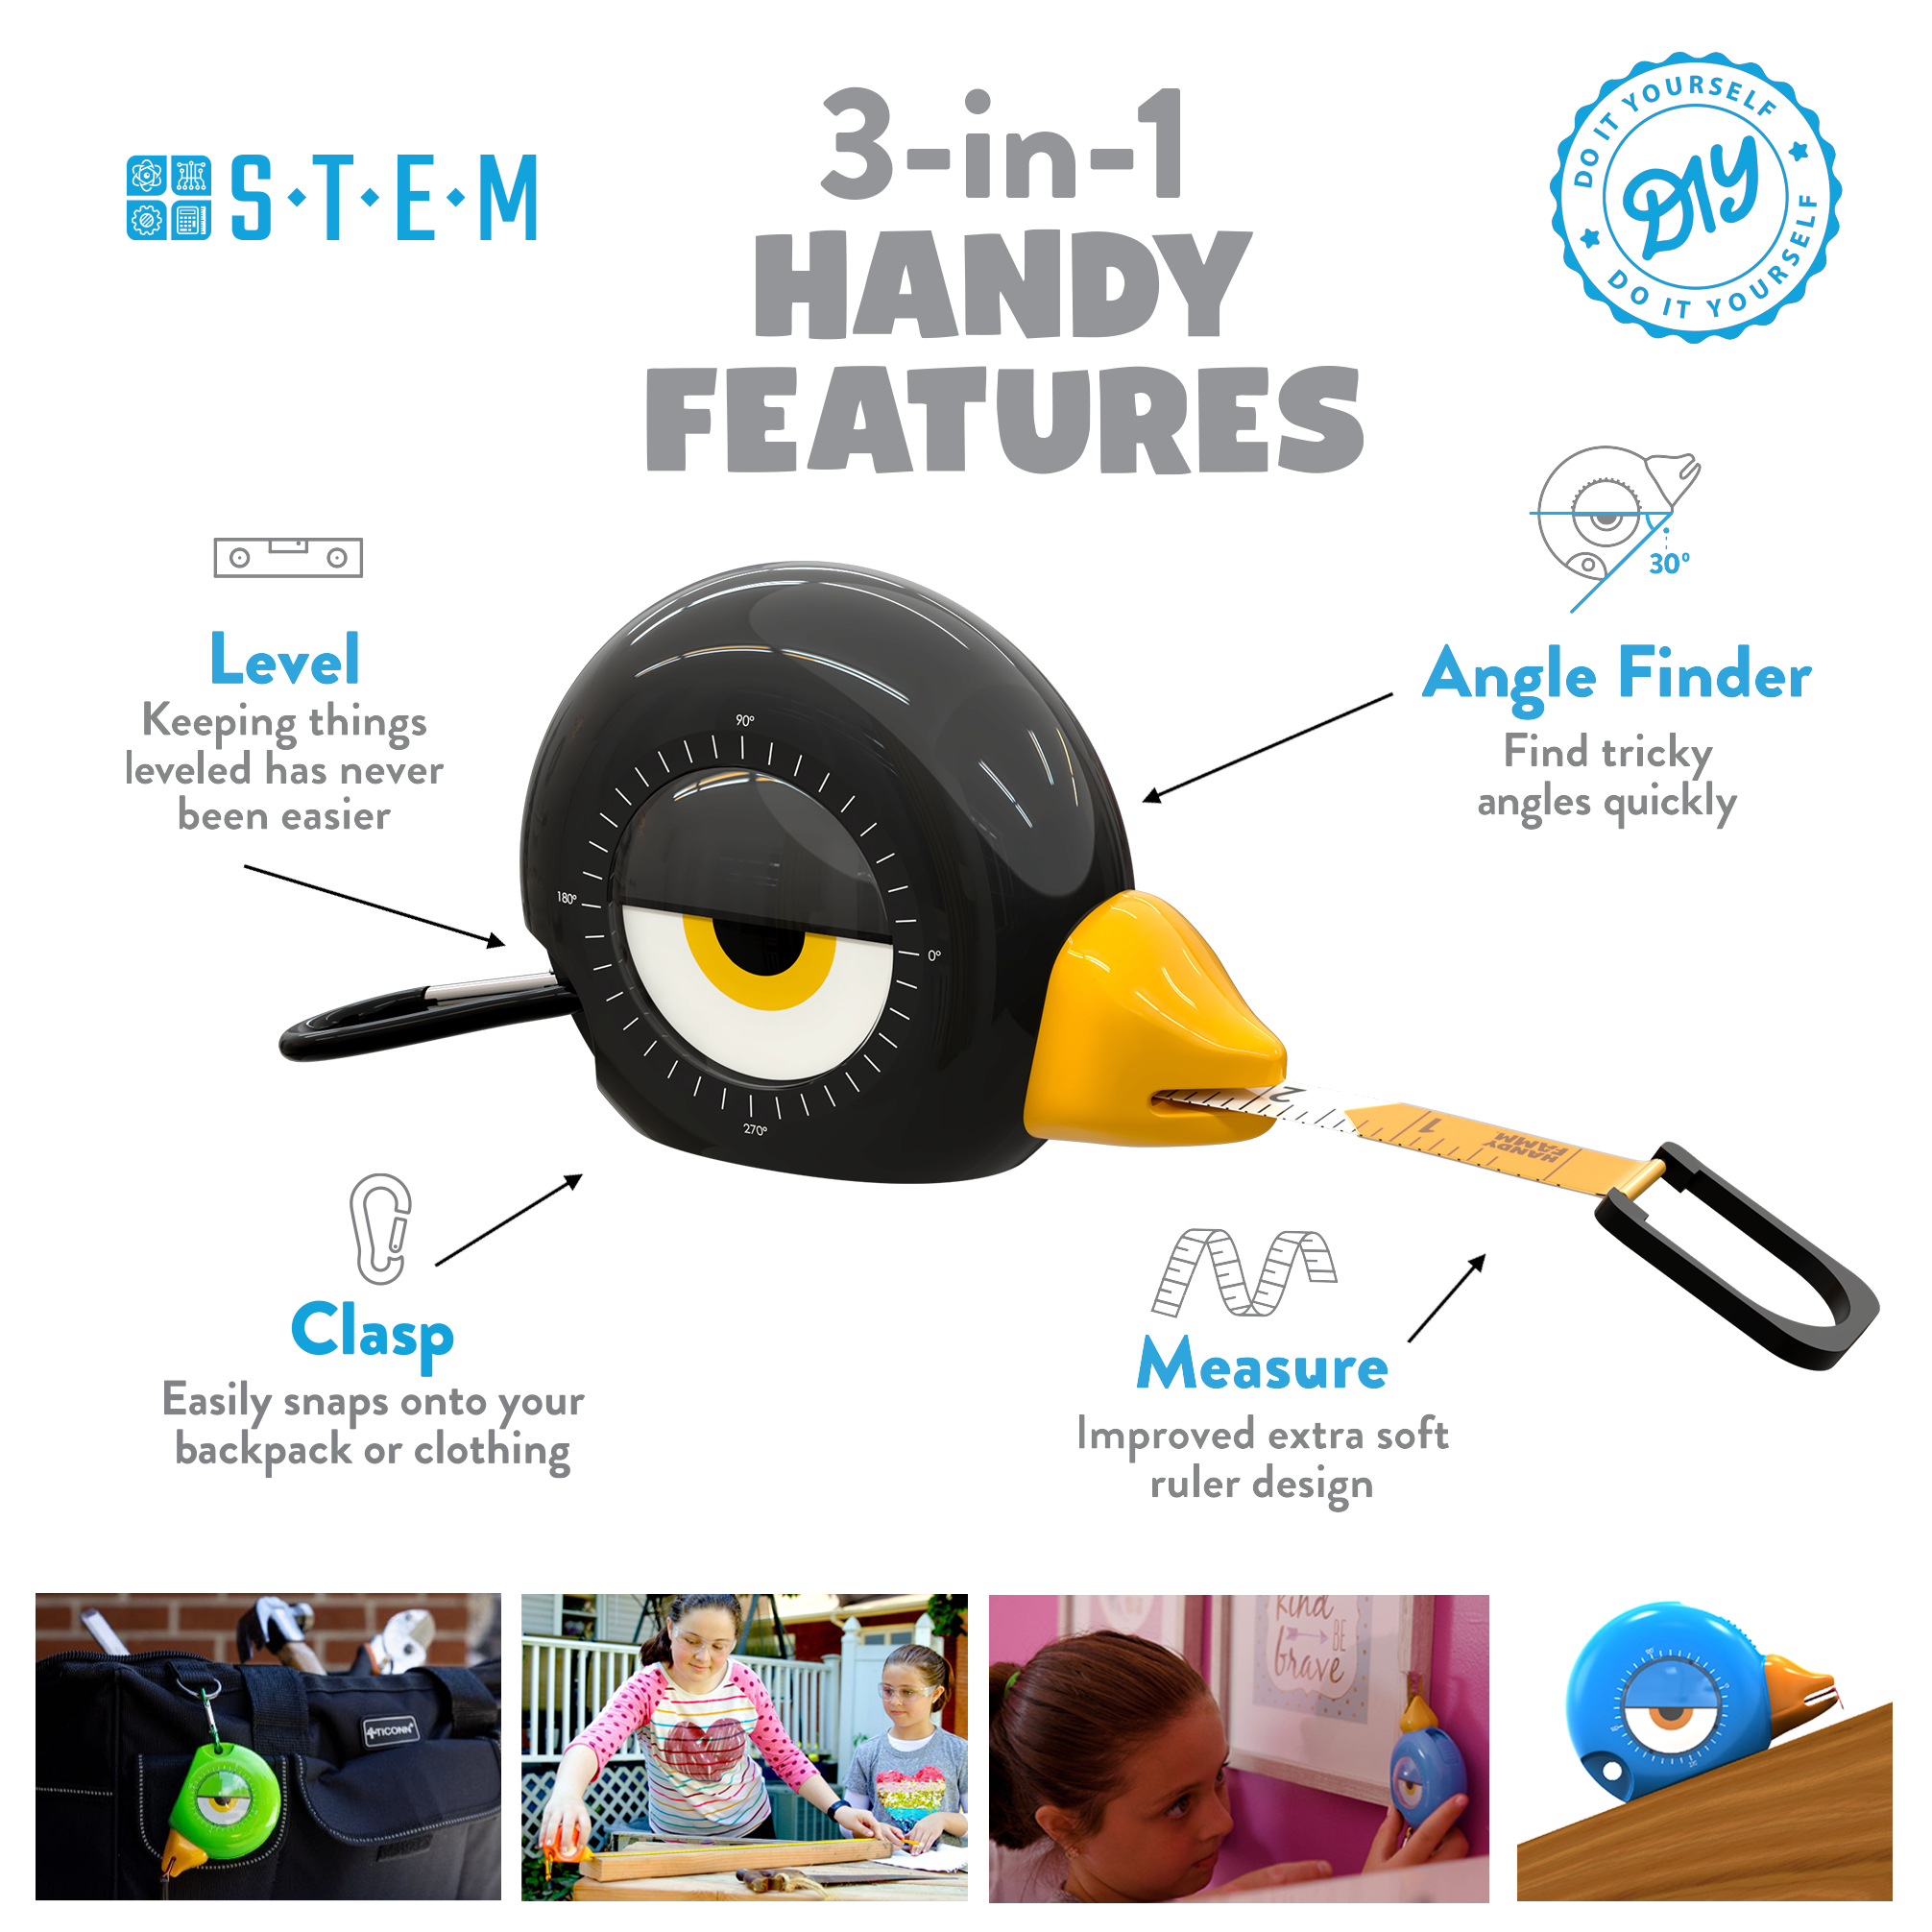 Handy Famm Fun Kids Black Bird Tape Measure – HandyFamm